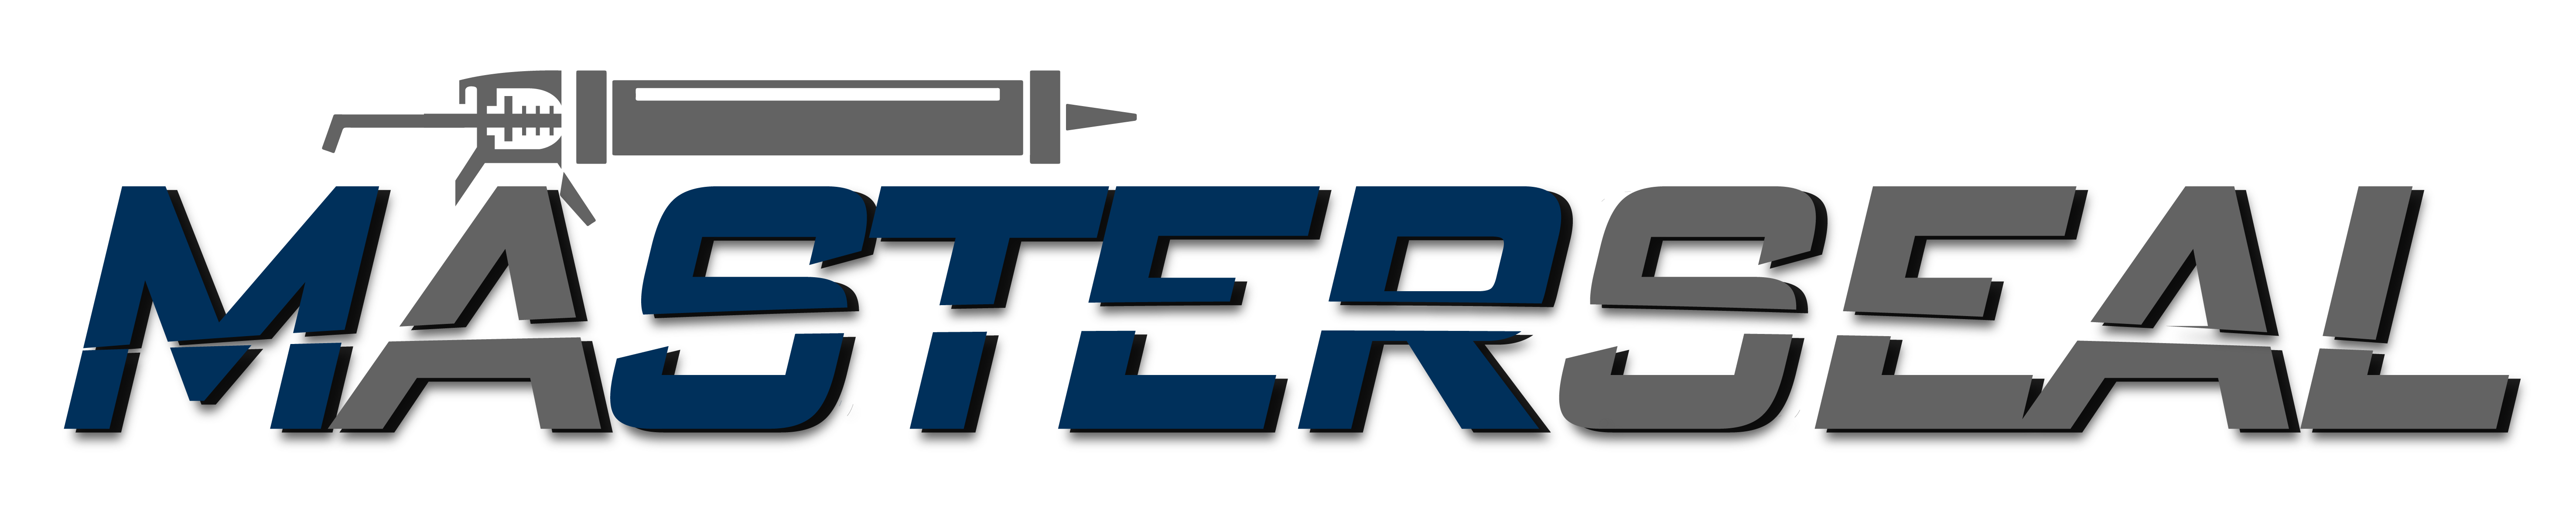 masterseal logo